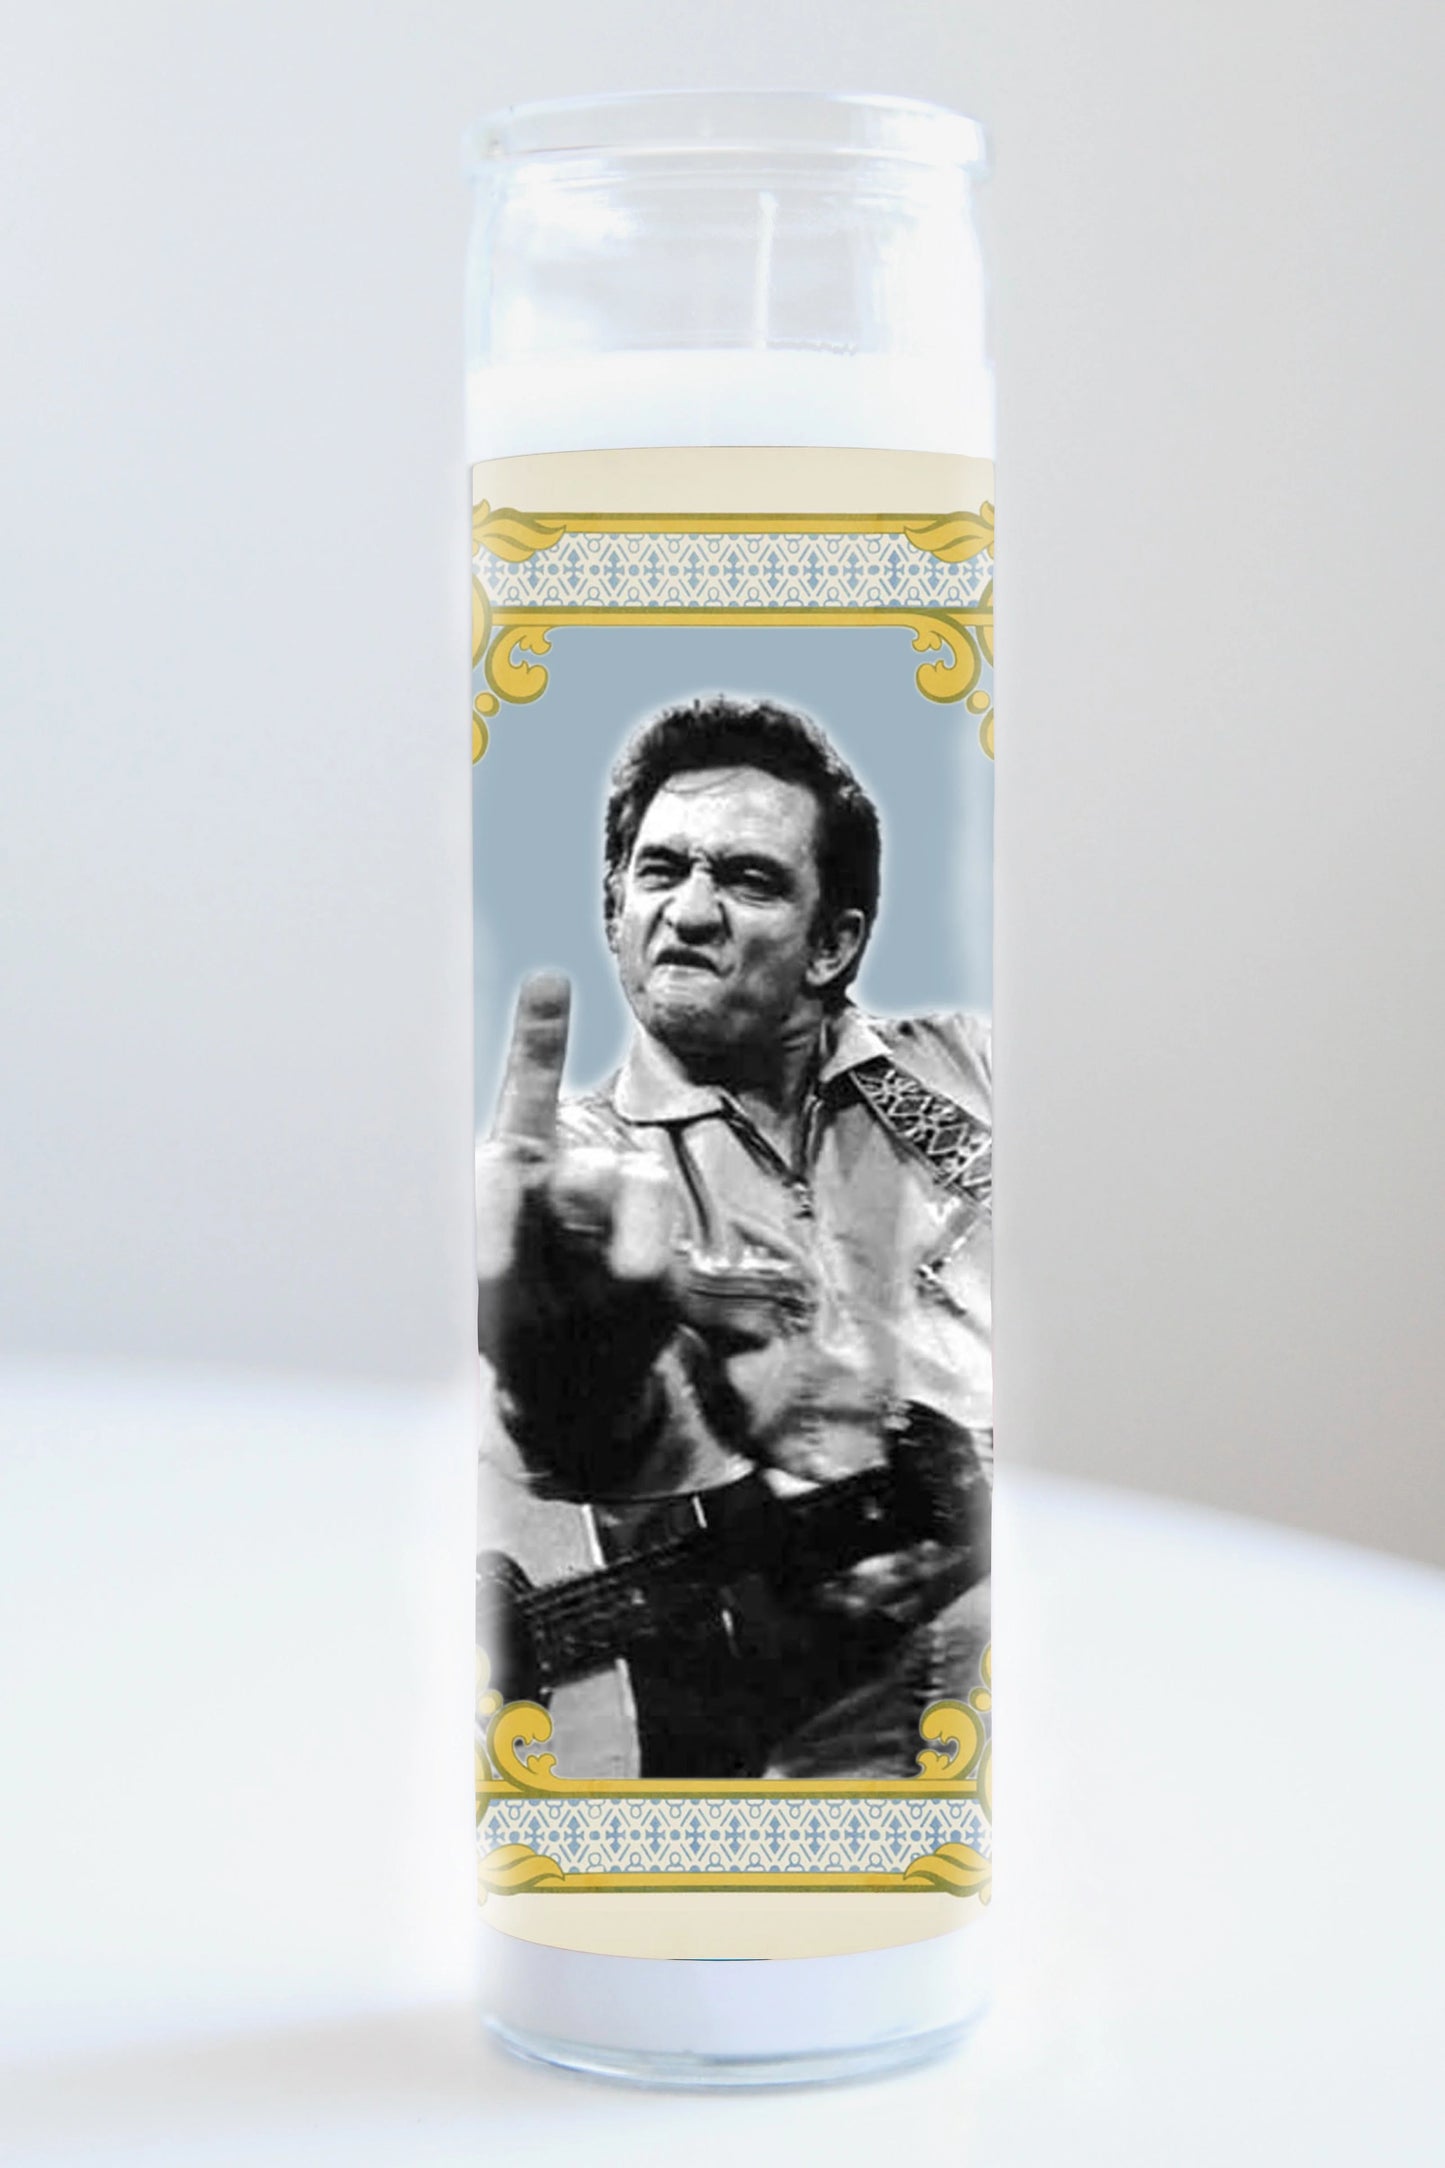 Johnny Cash "Middle Finger" Candle